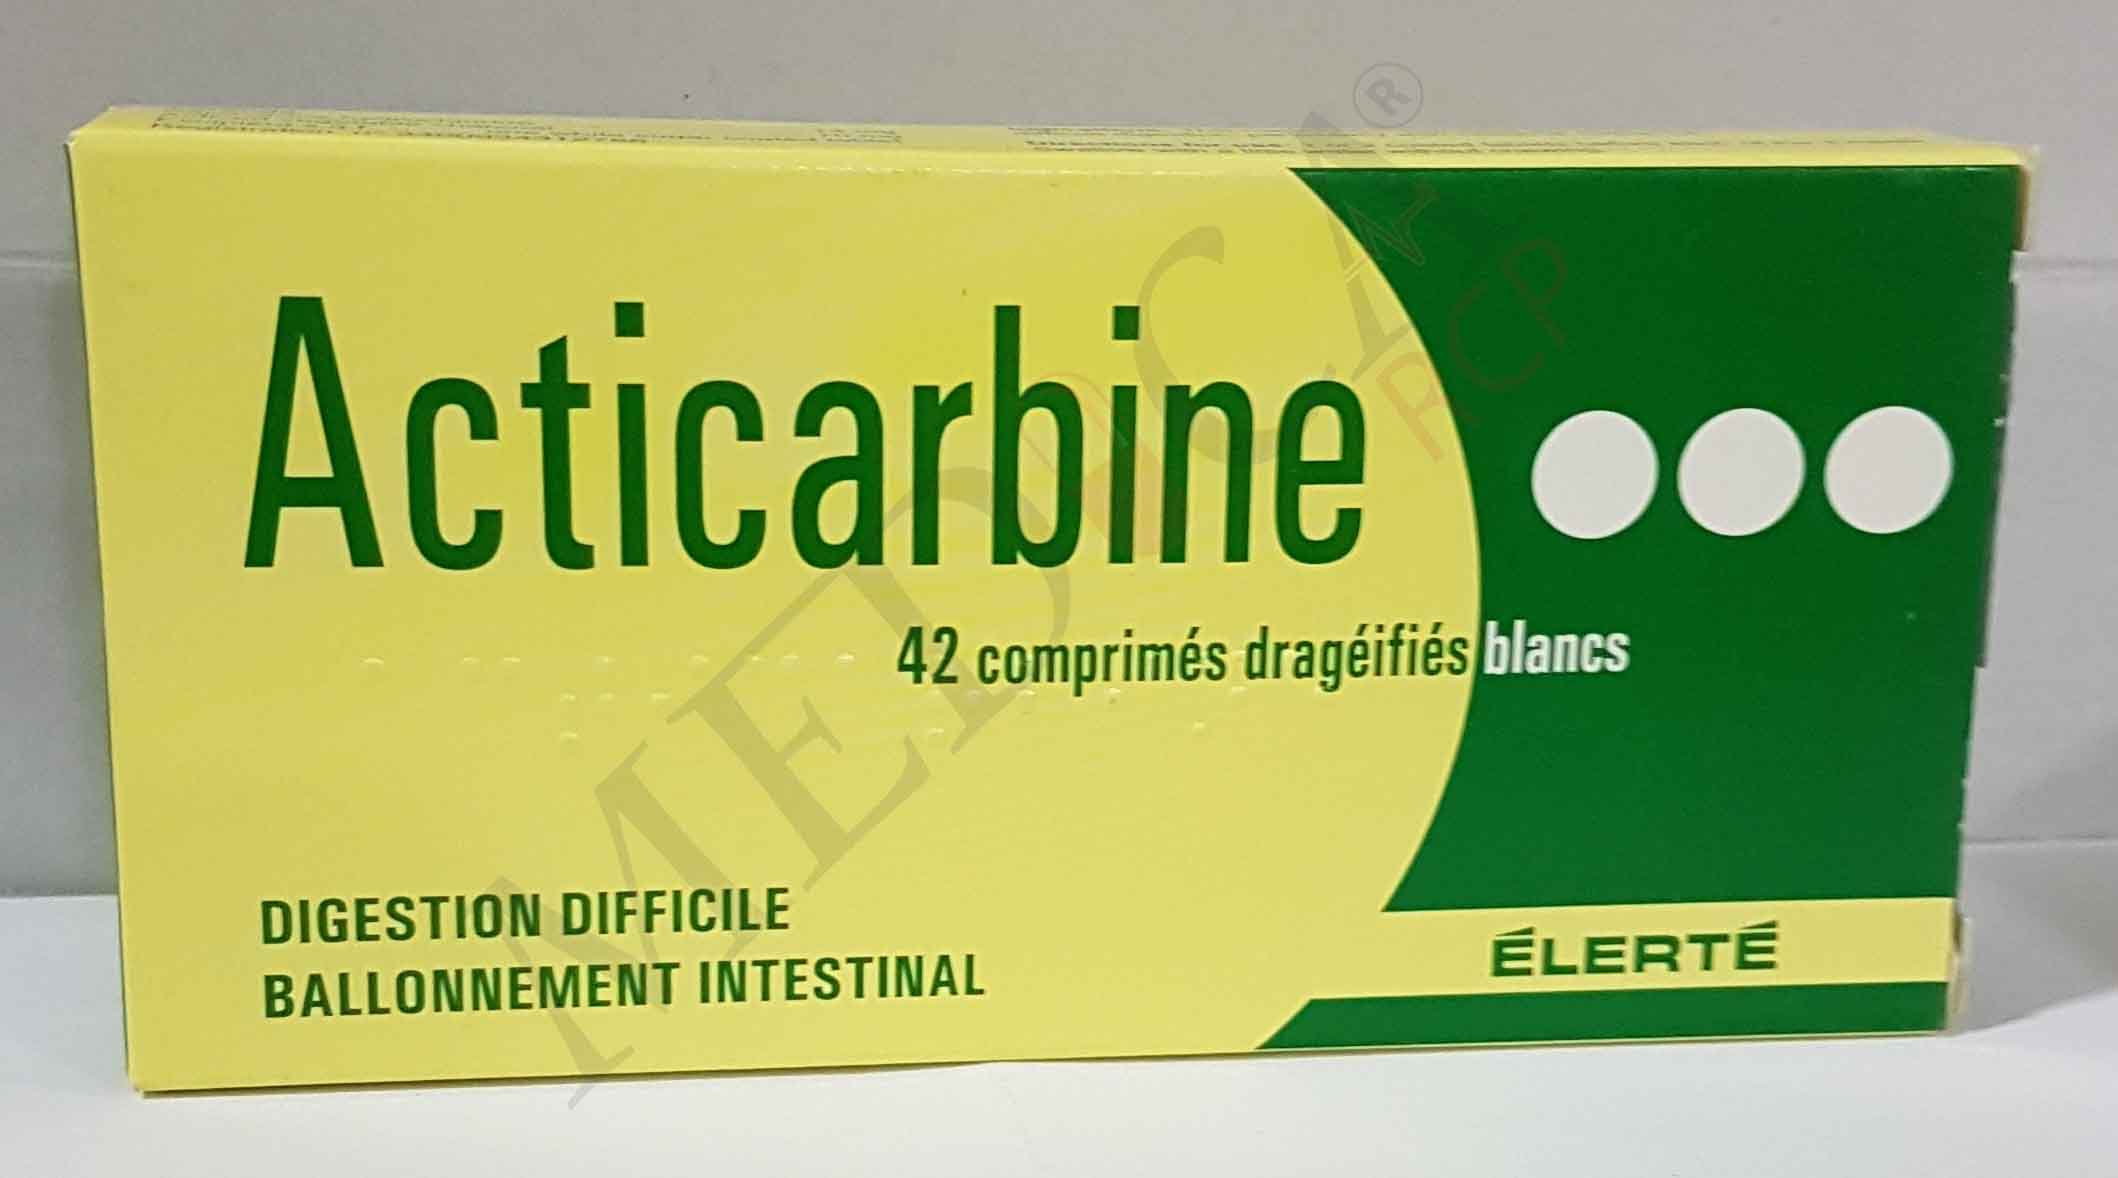 Acticarbine